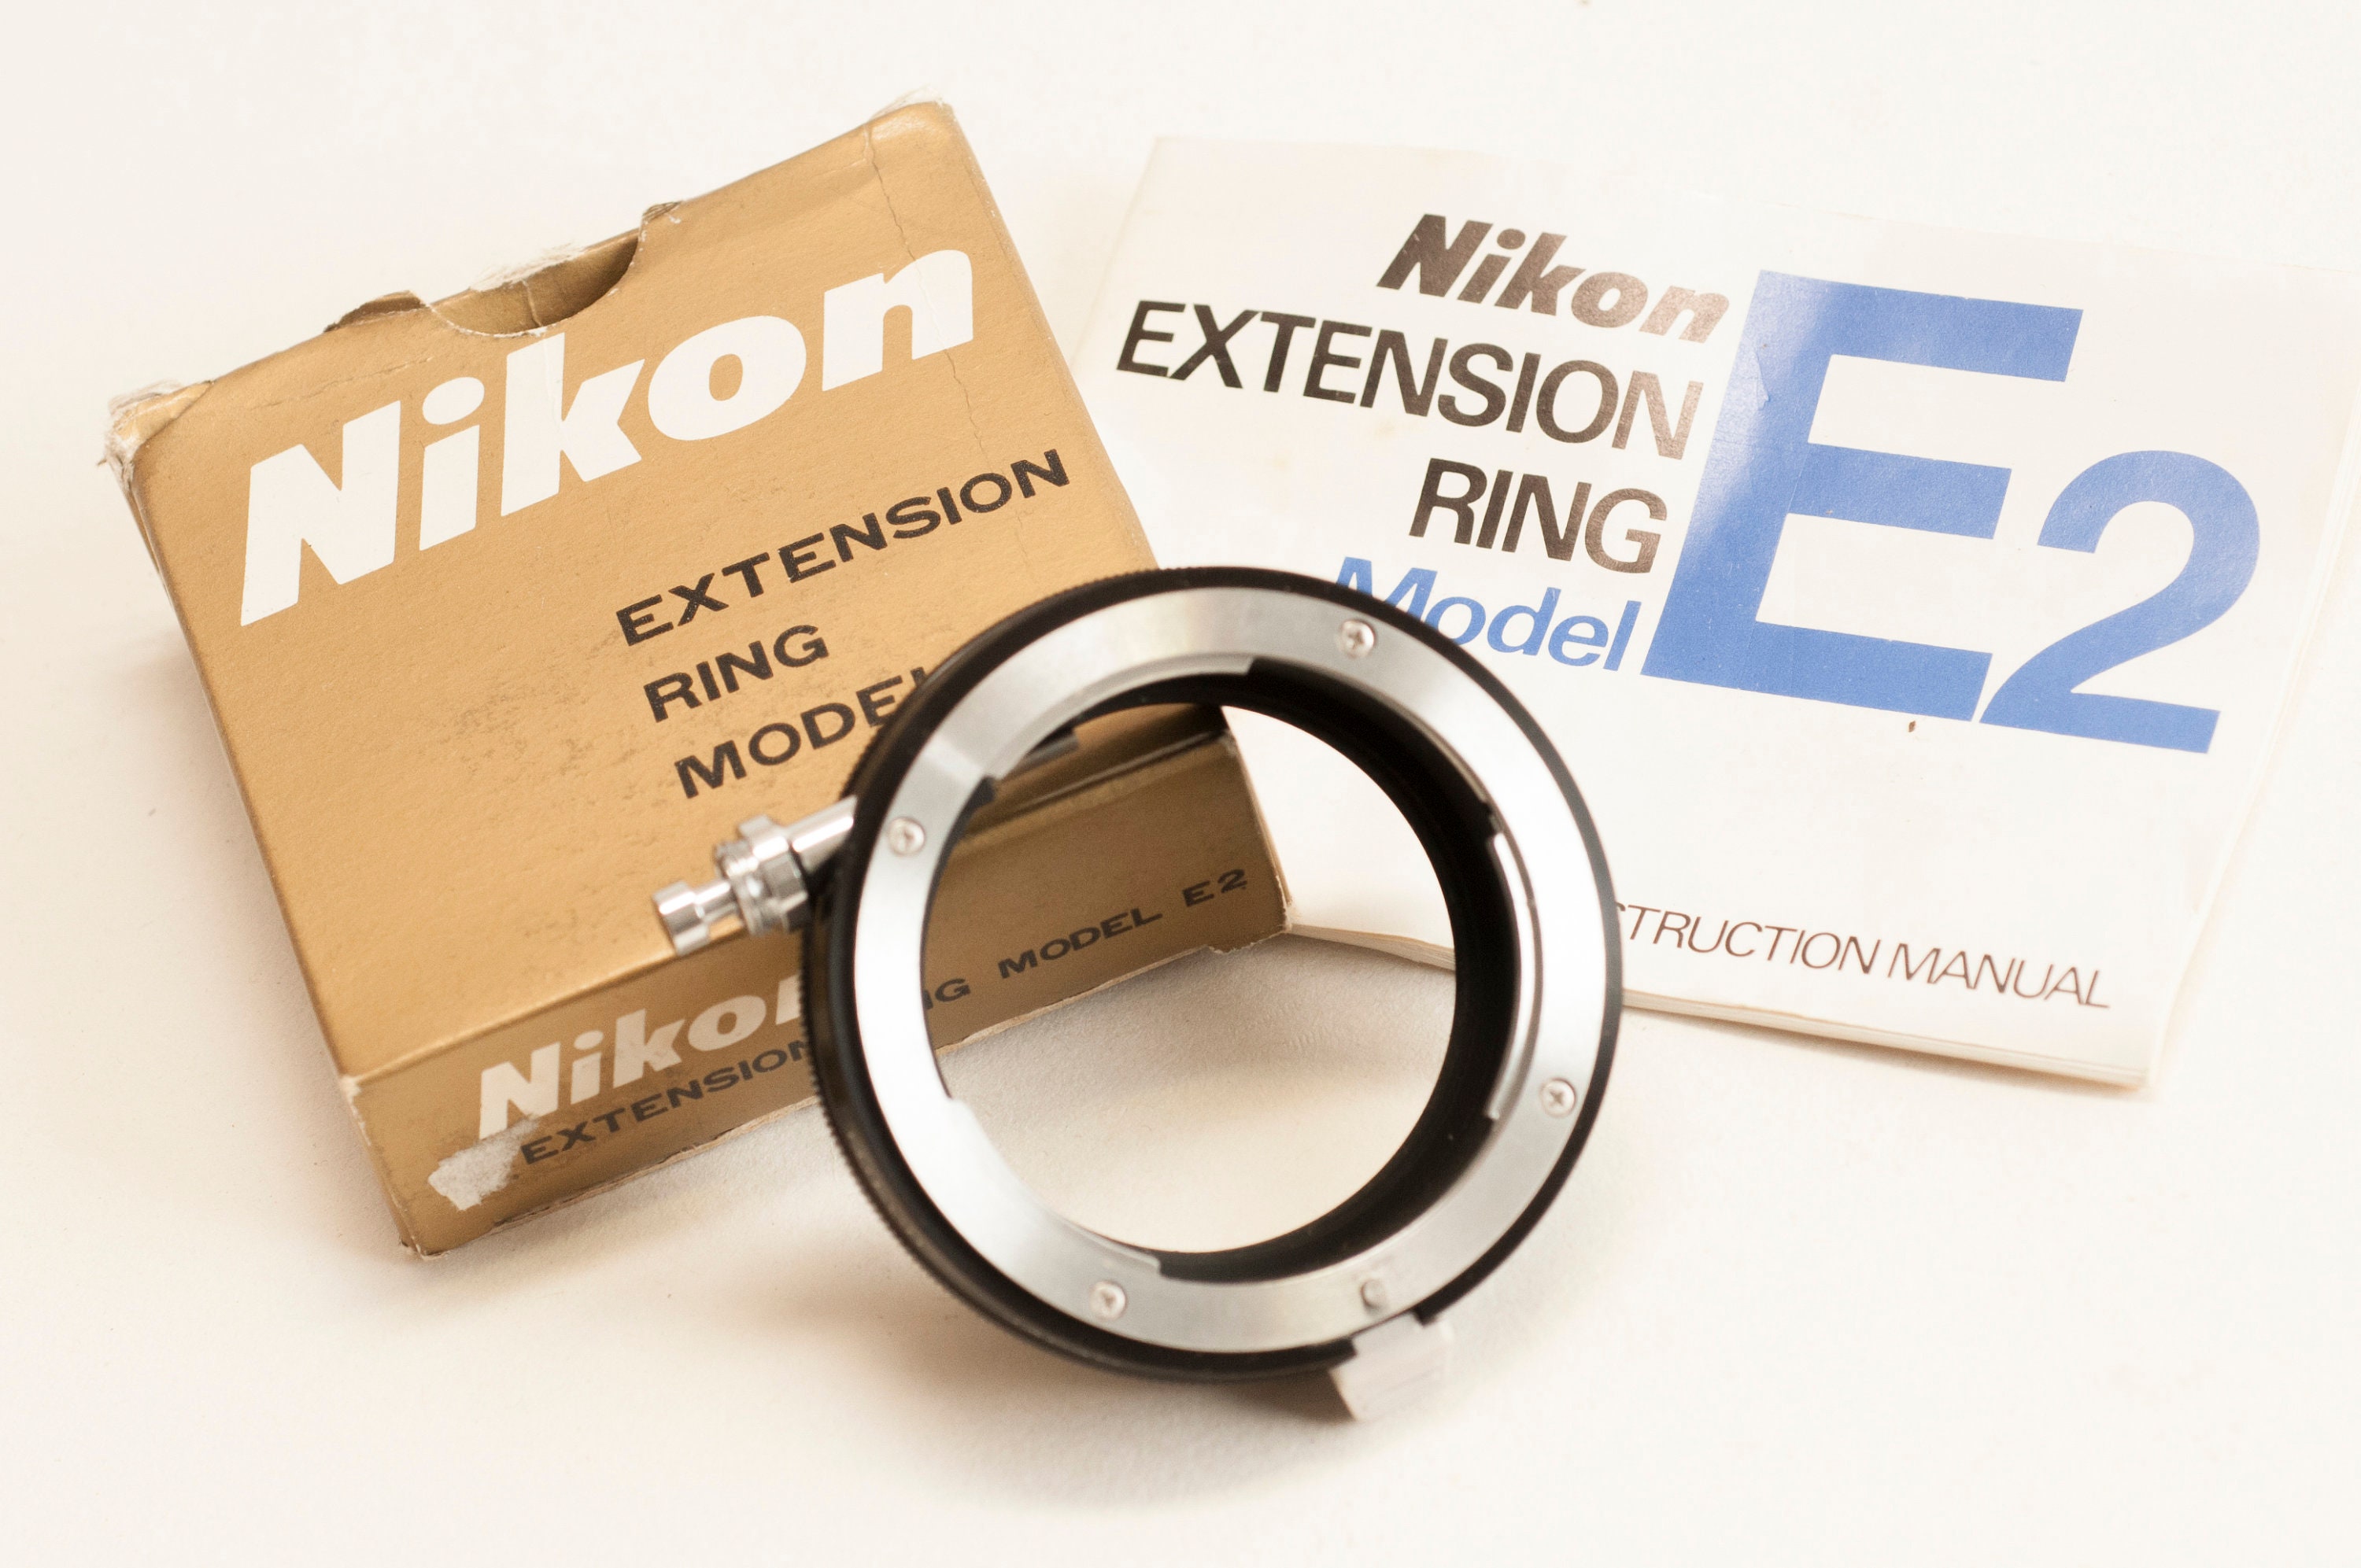 Nikon Extension Ring MODEL E2 for Nikon F2 Series and - Etsy